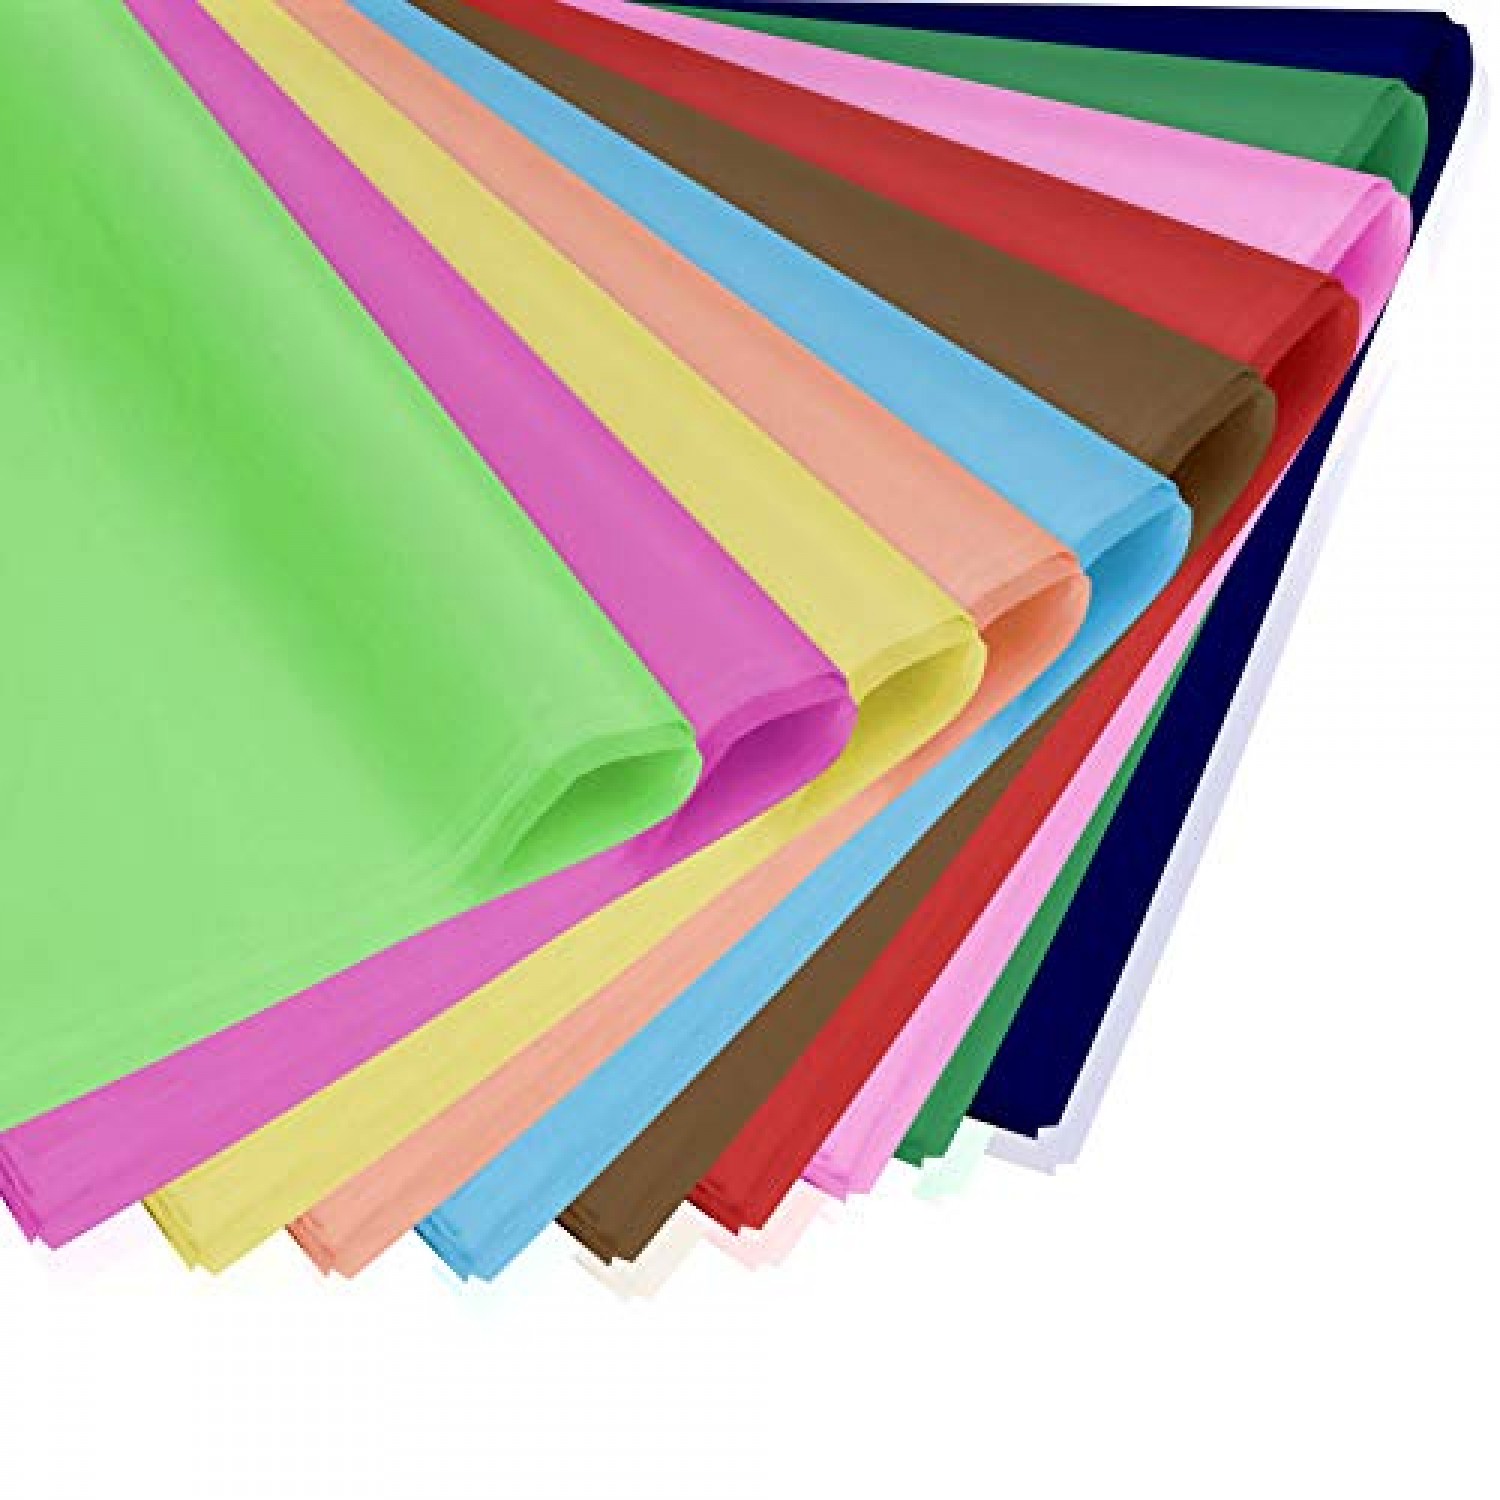 DIY Tissue Paper Rainbow  Tissue paper art, Tissue paper crafts, Rainbow  crafts